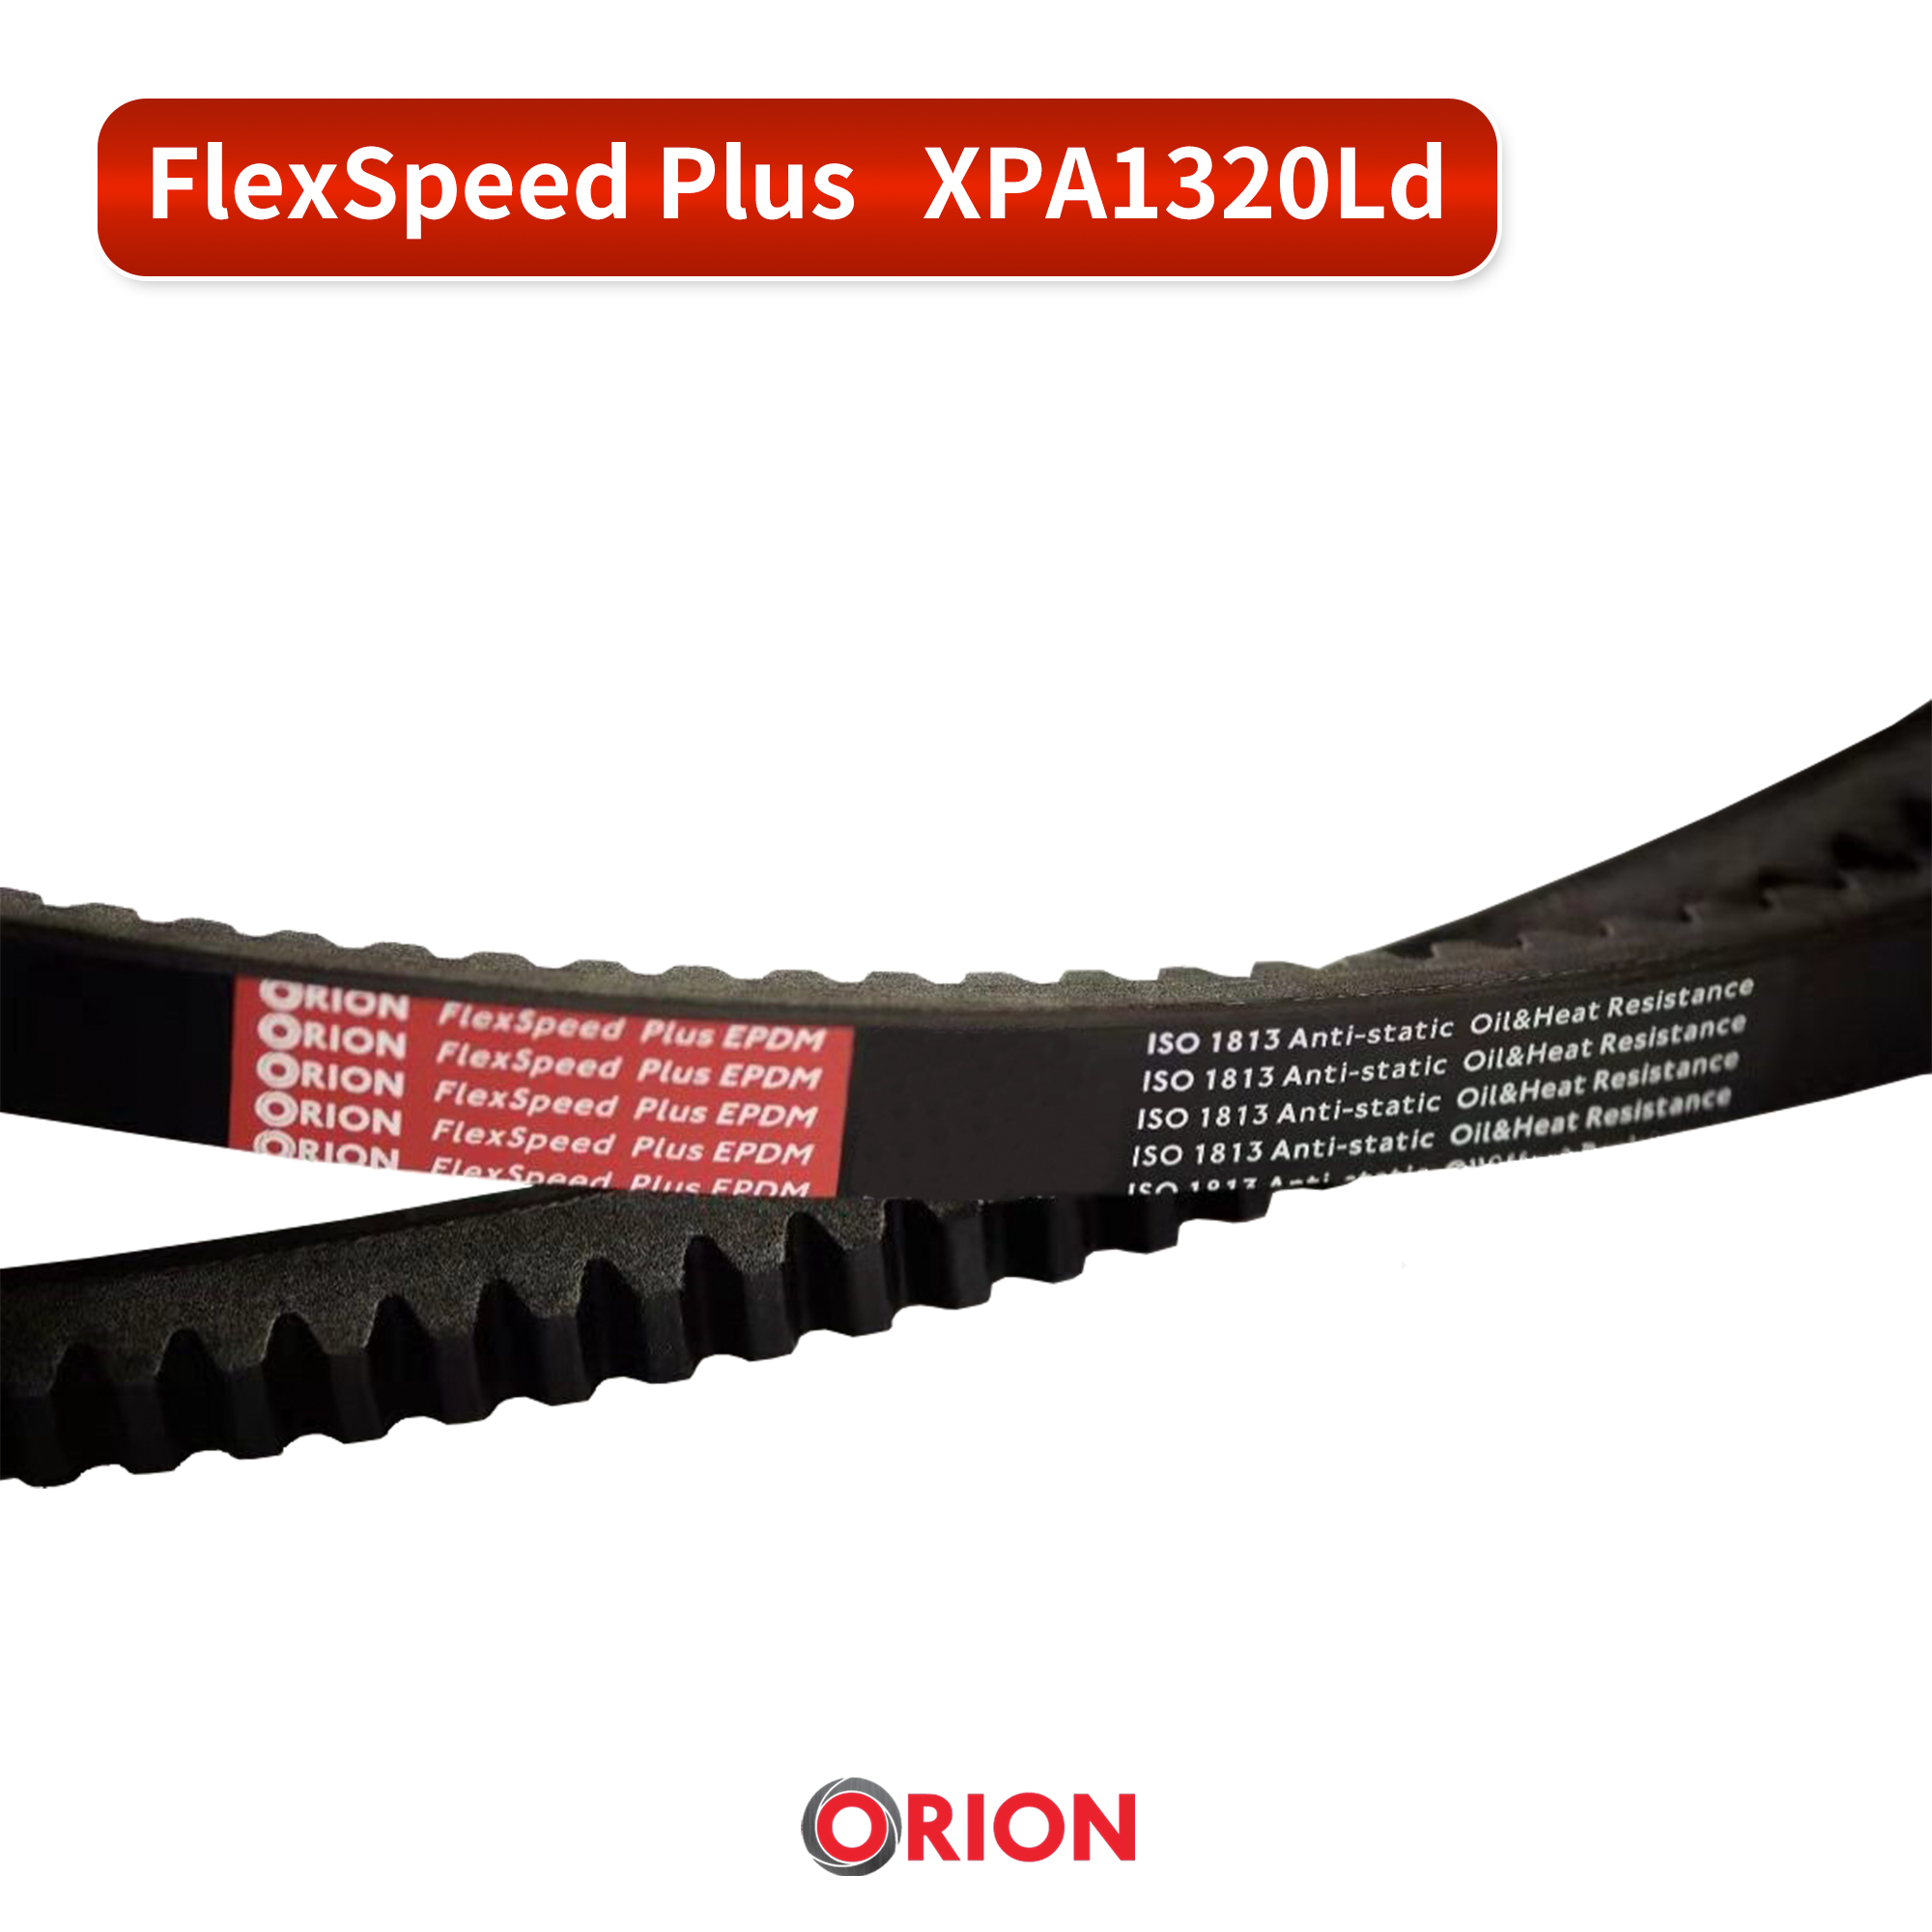 ORION FlexSpeed Plus XPA1320 Ld （红标）